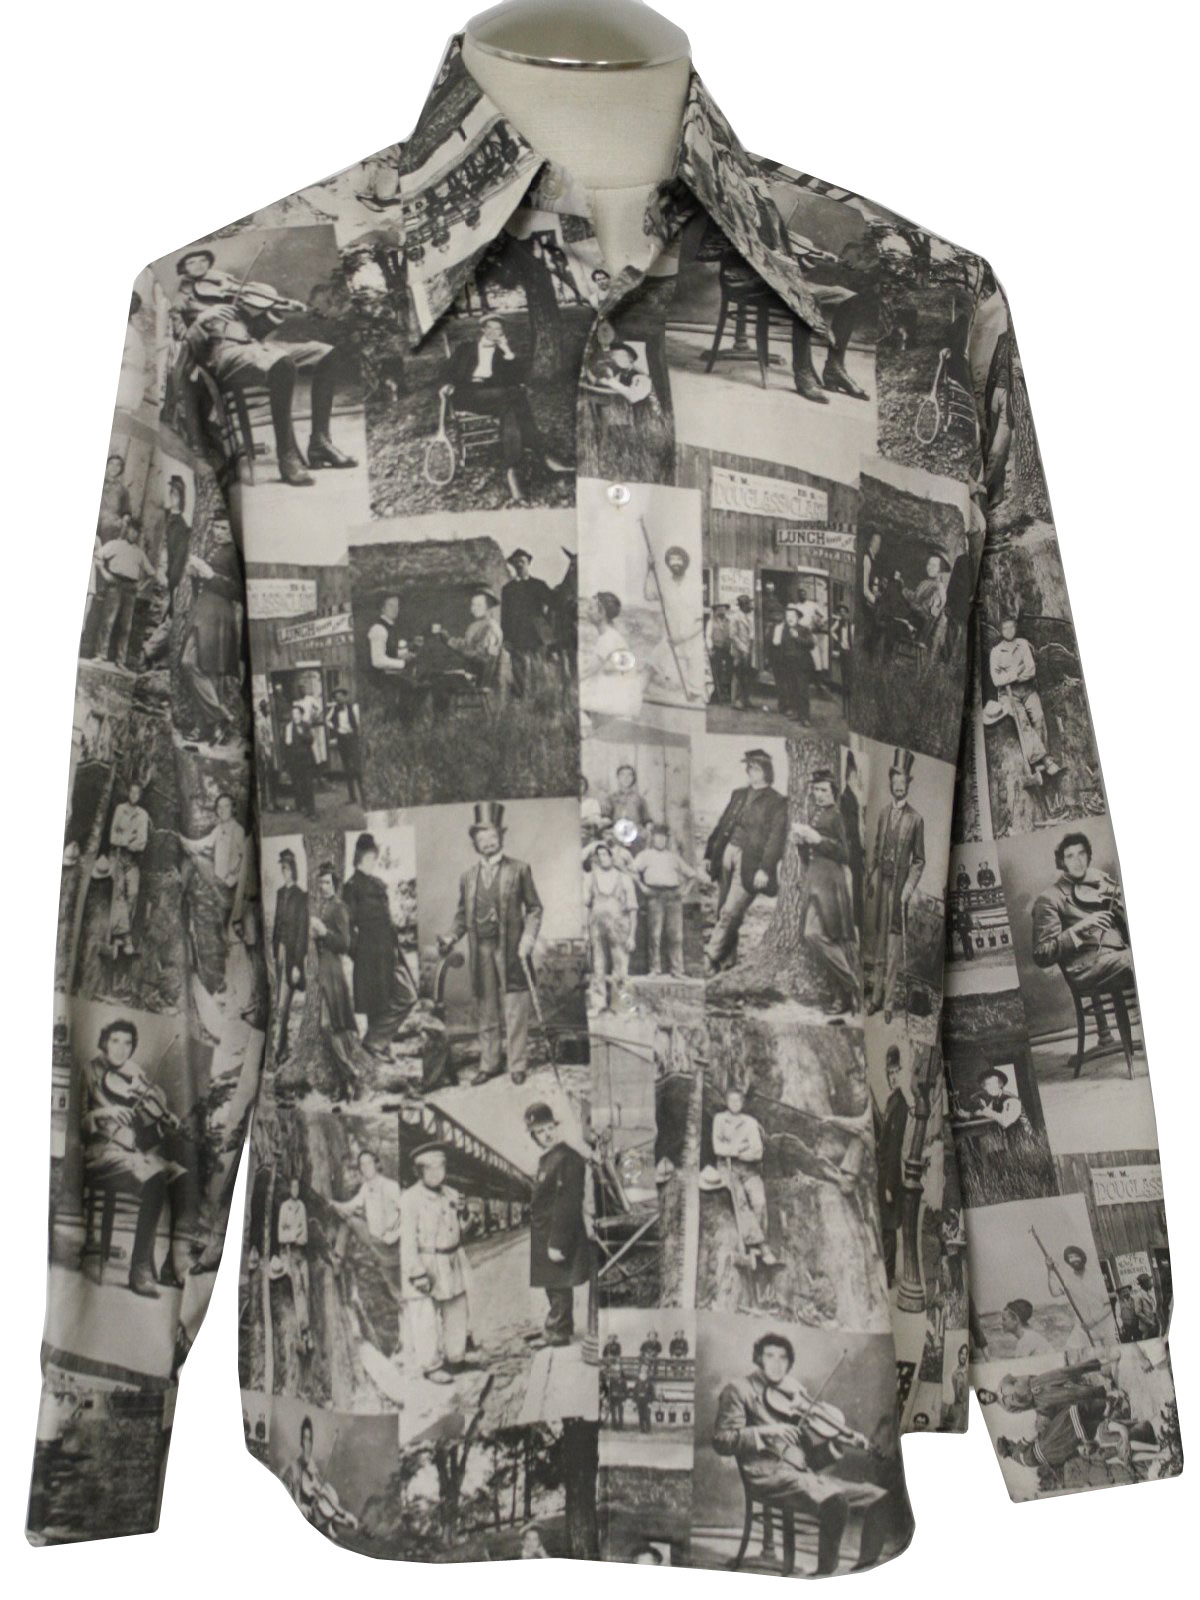 Retro 1970's Print Disco Shirt (Kennington) : 70s -Kennington- Mens ...